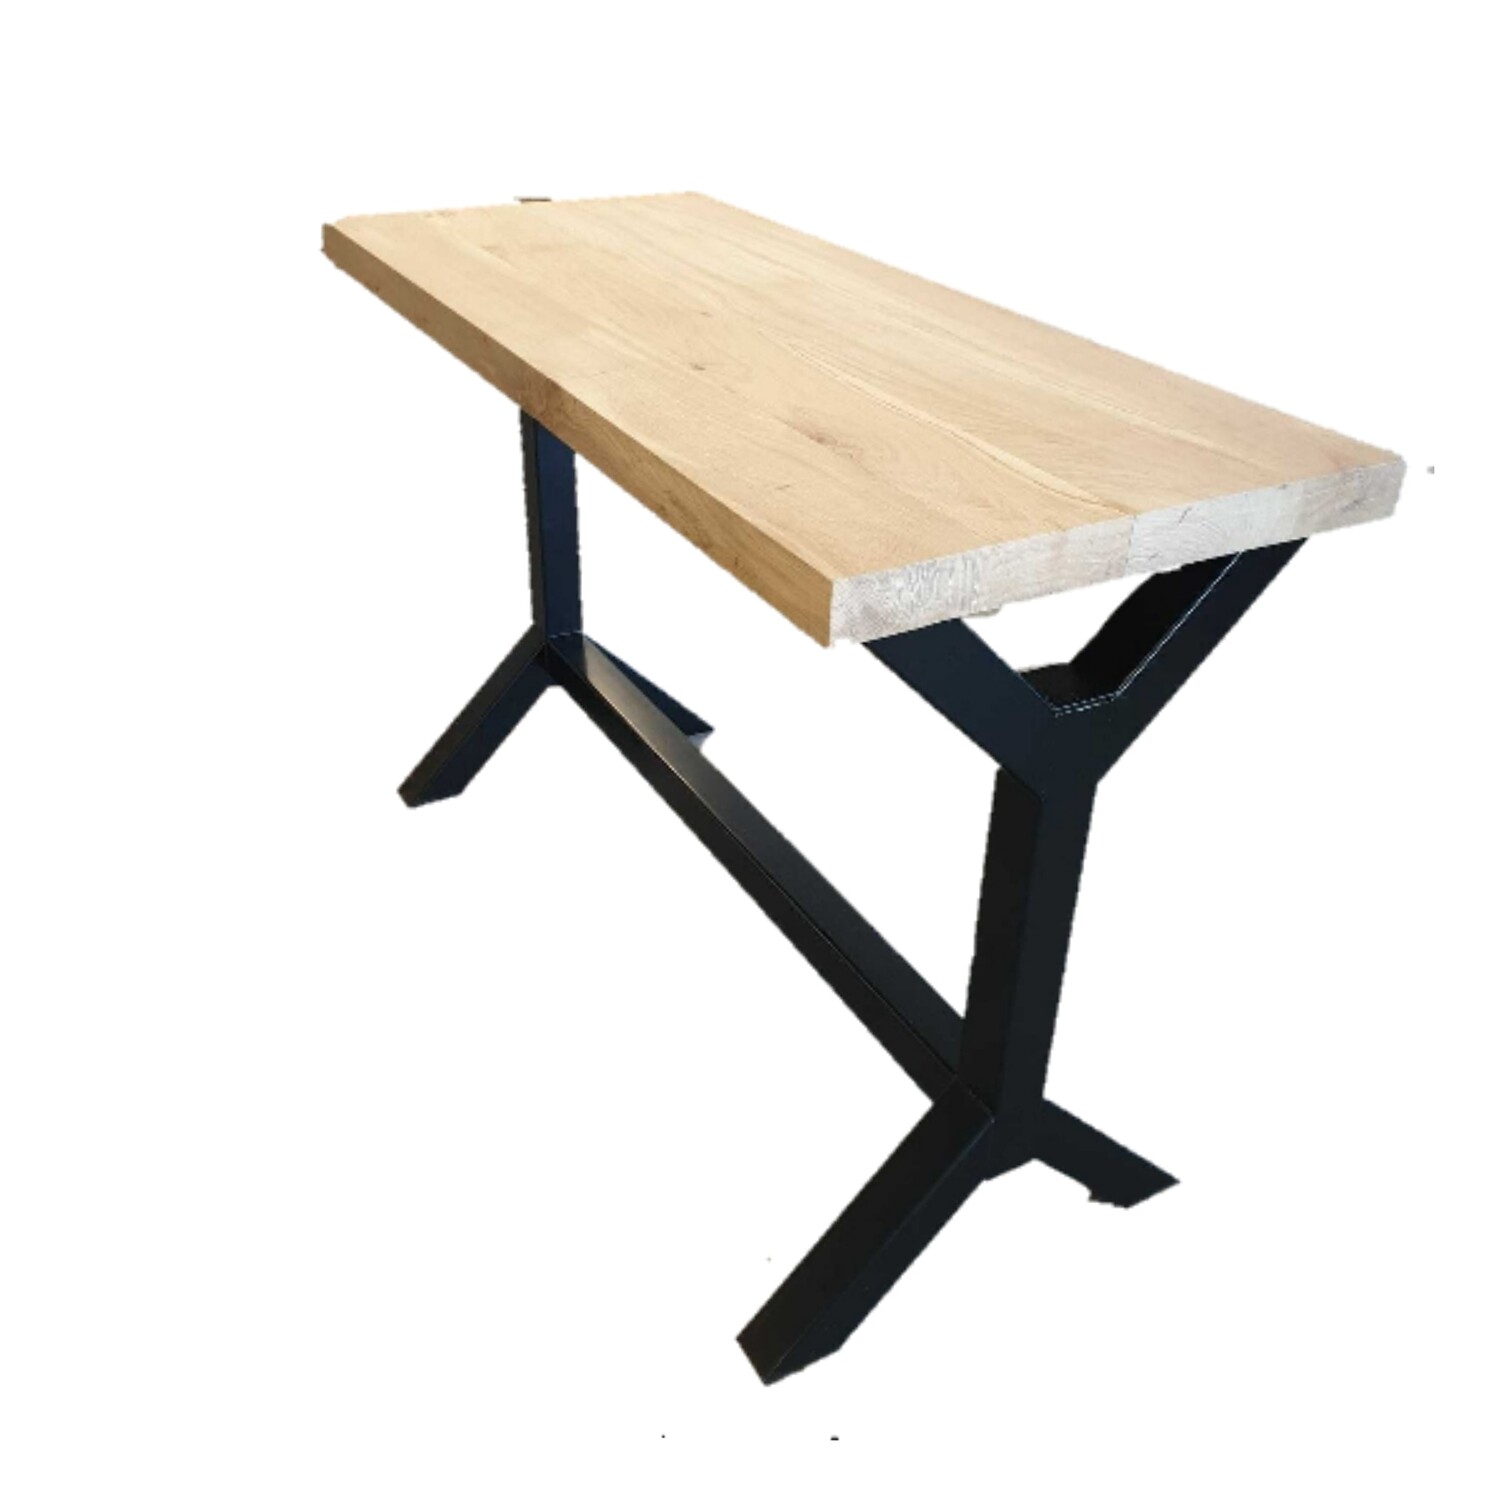 Solid oak bar table